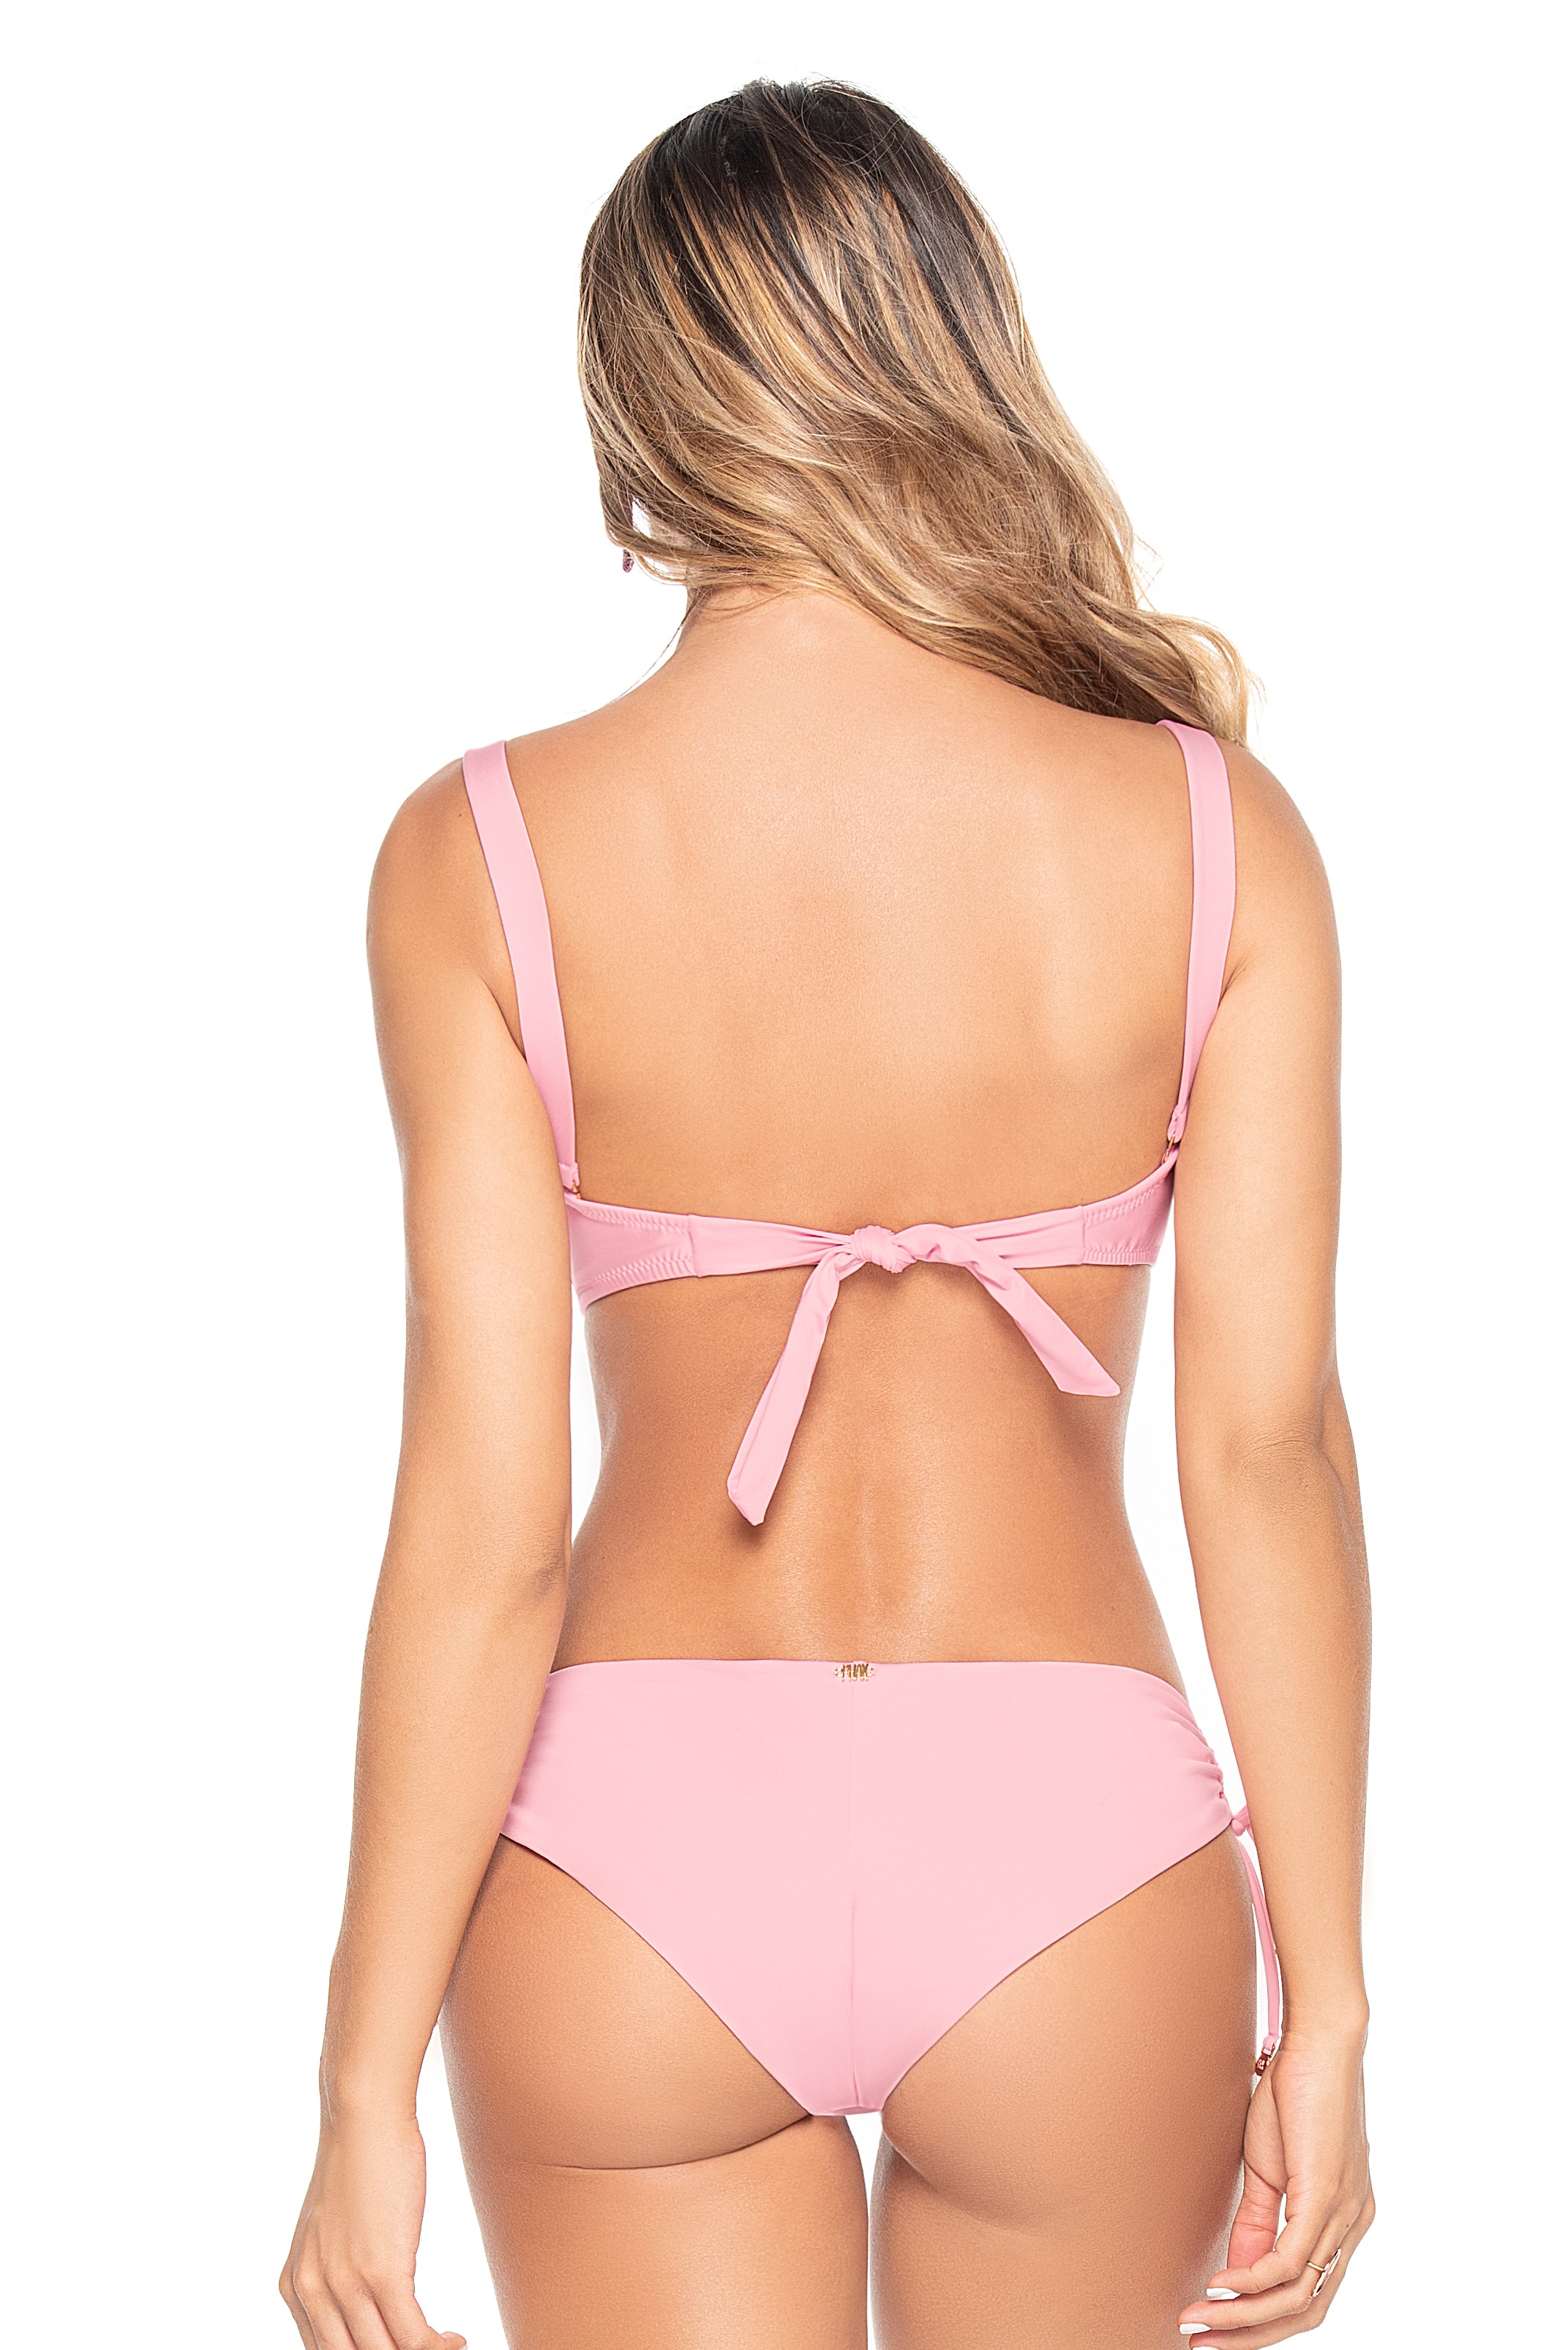 Phax Licht Roze Bandeau Bikini 